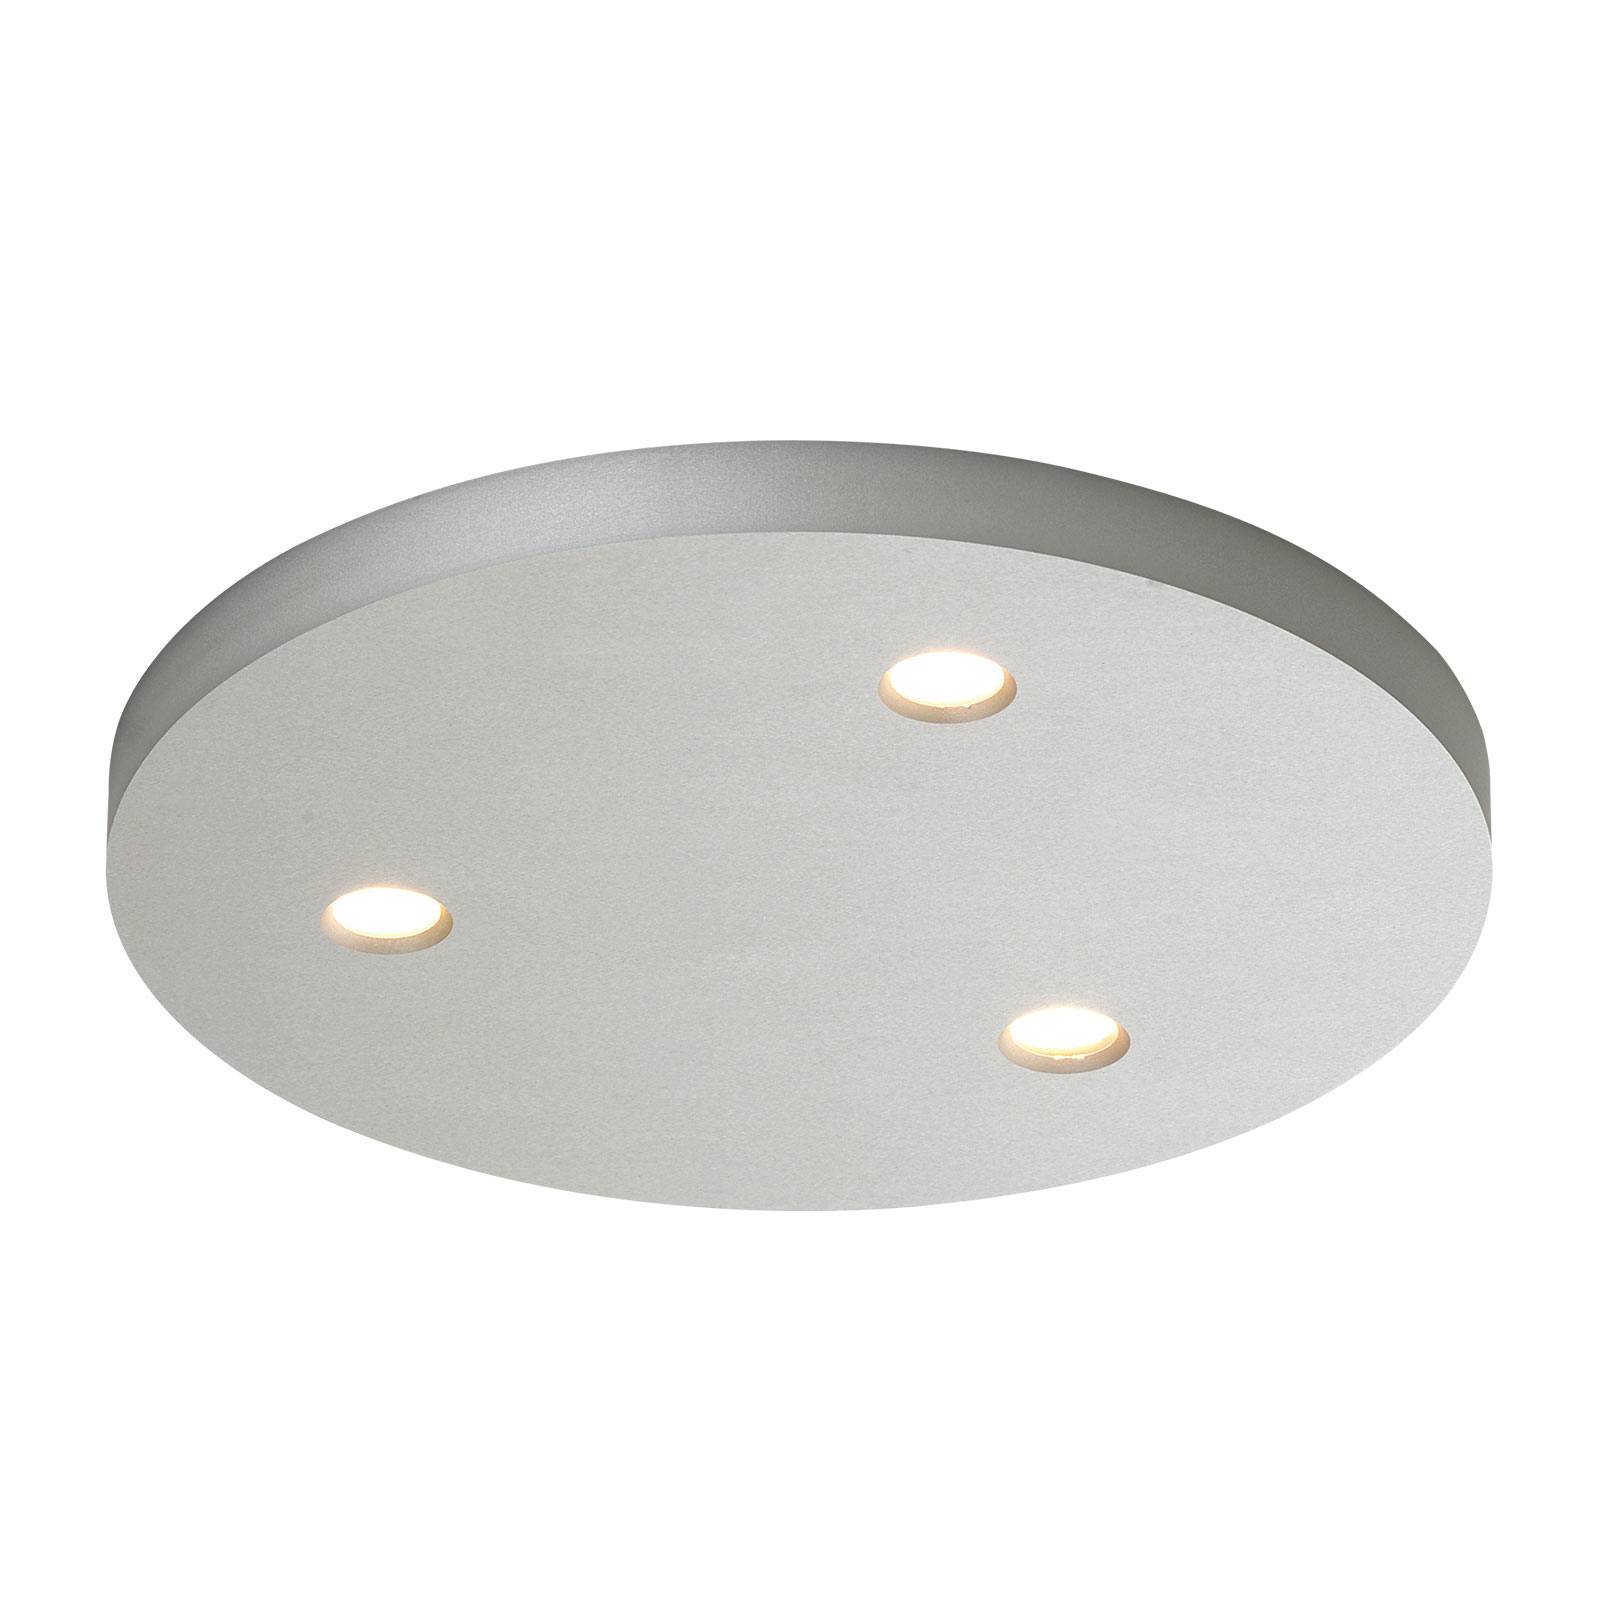 Image of Bopp Close plafonnier LED à 3 lampes rond alu 4011895496027